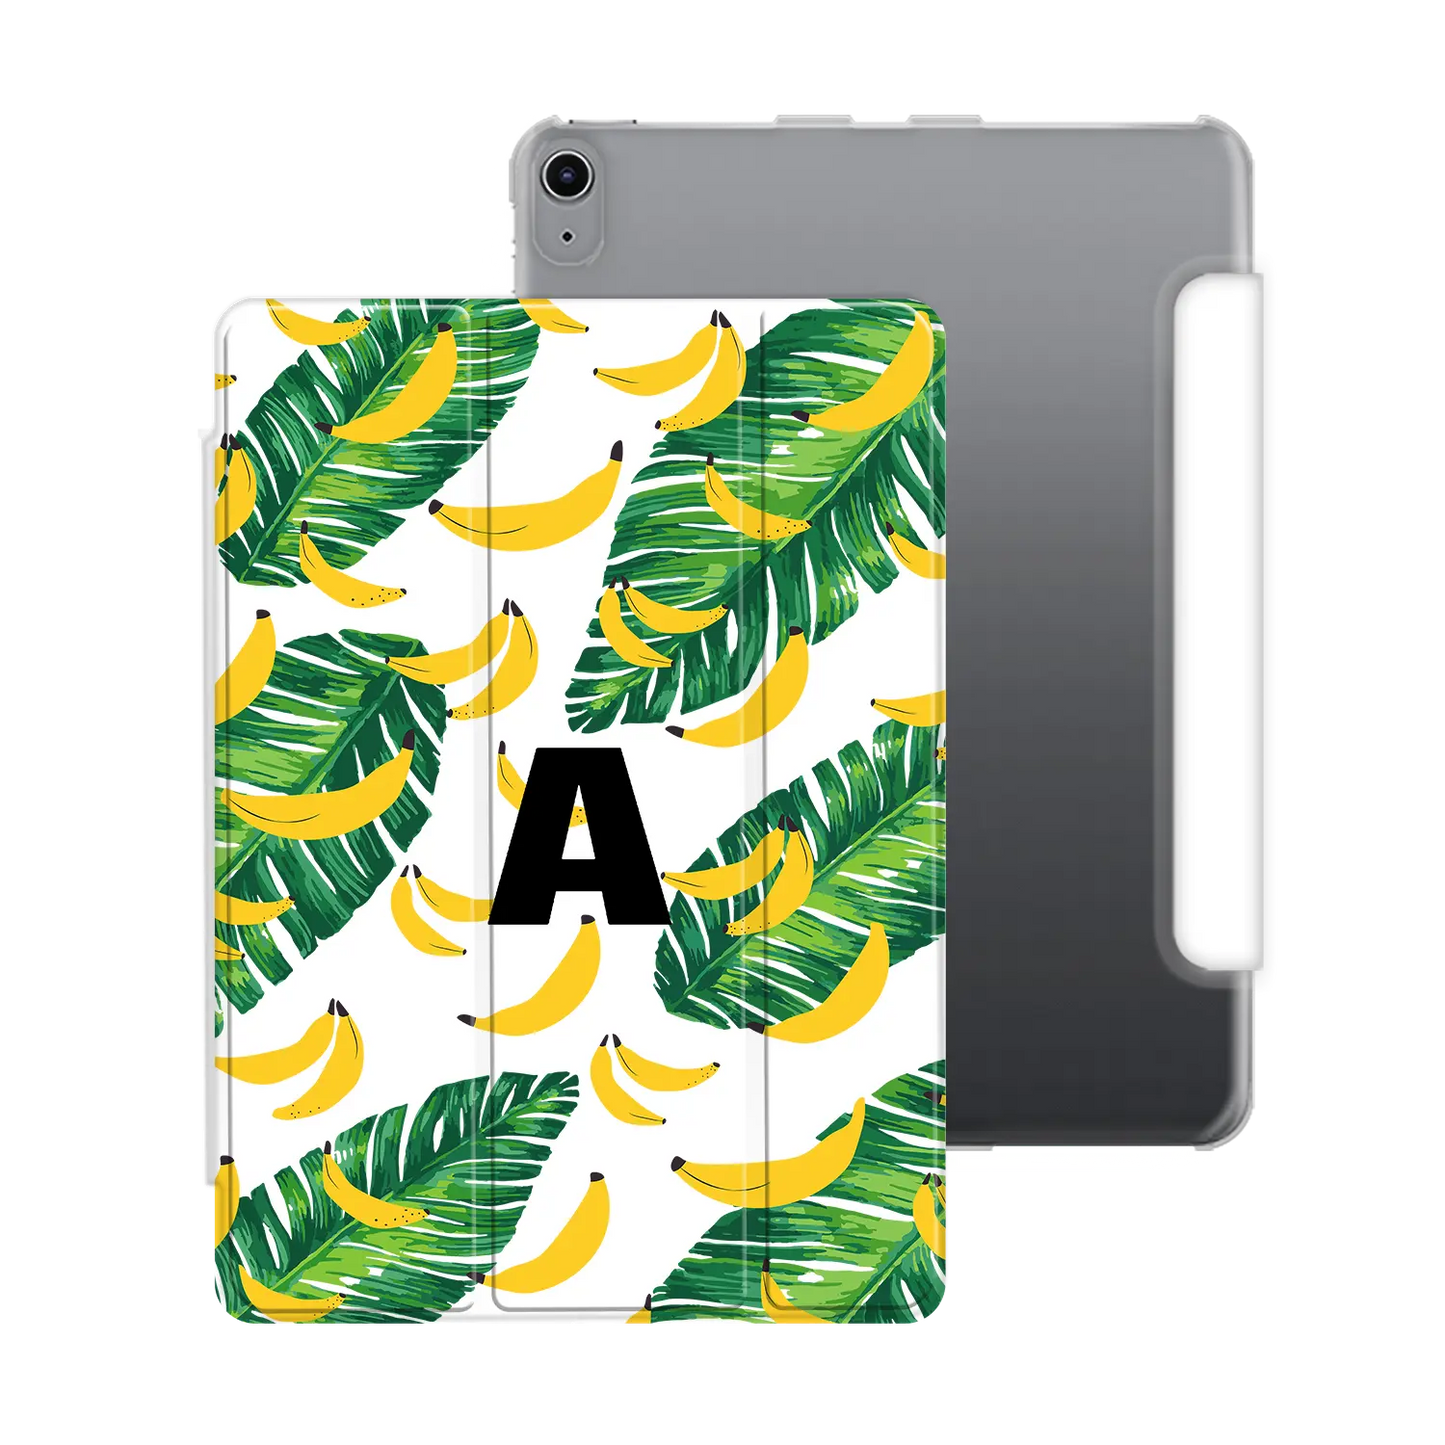 Going Bananas - Personalised iPad Case